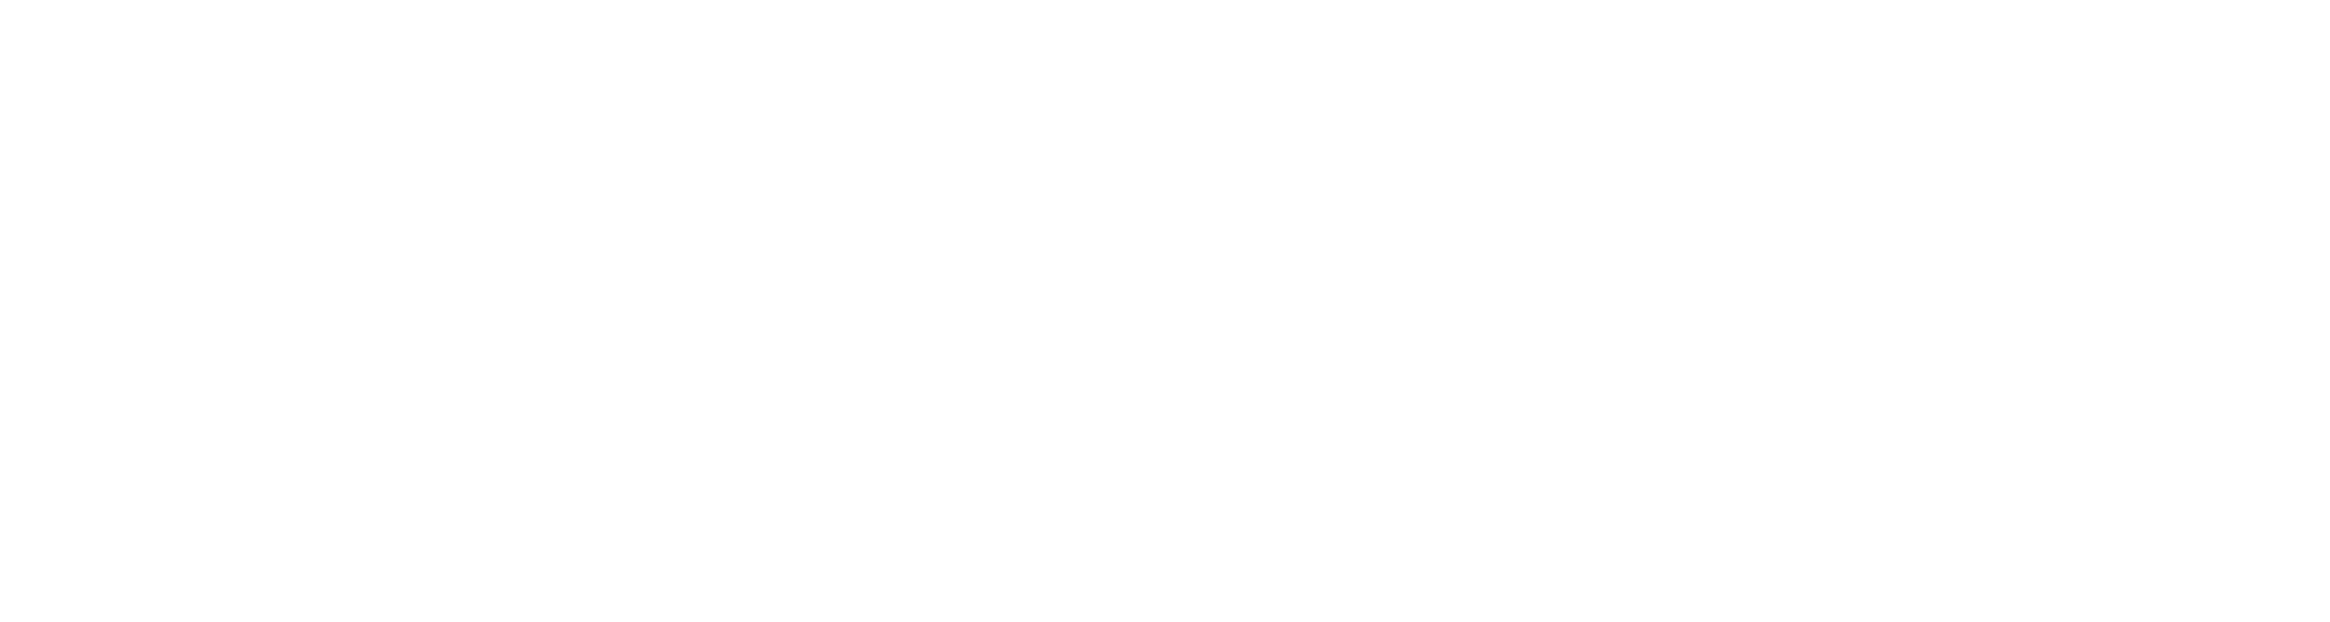 Copy of Wonderland-Logo-Coworking-white